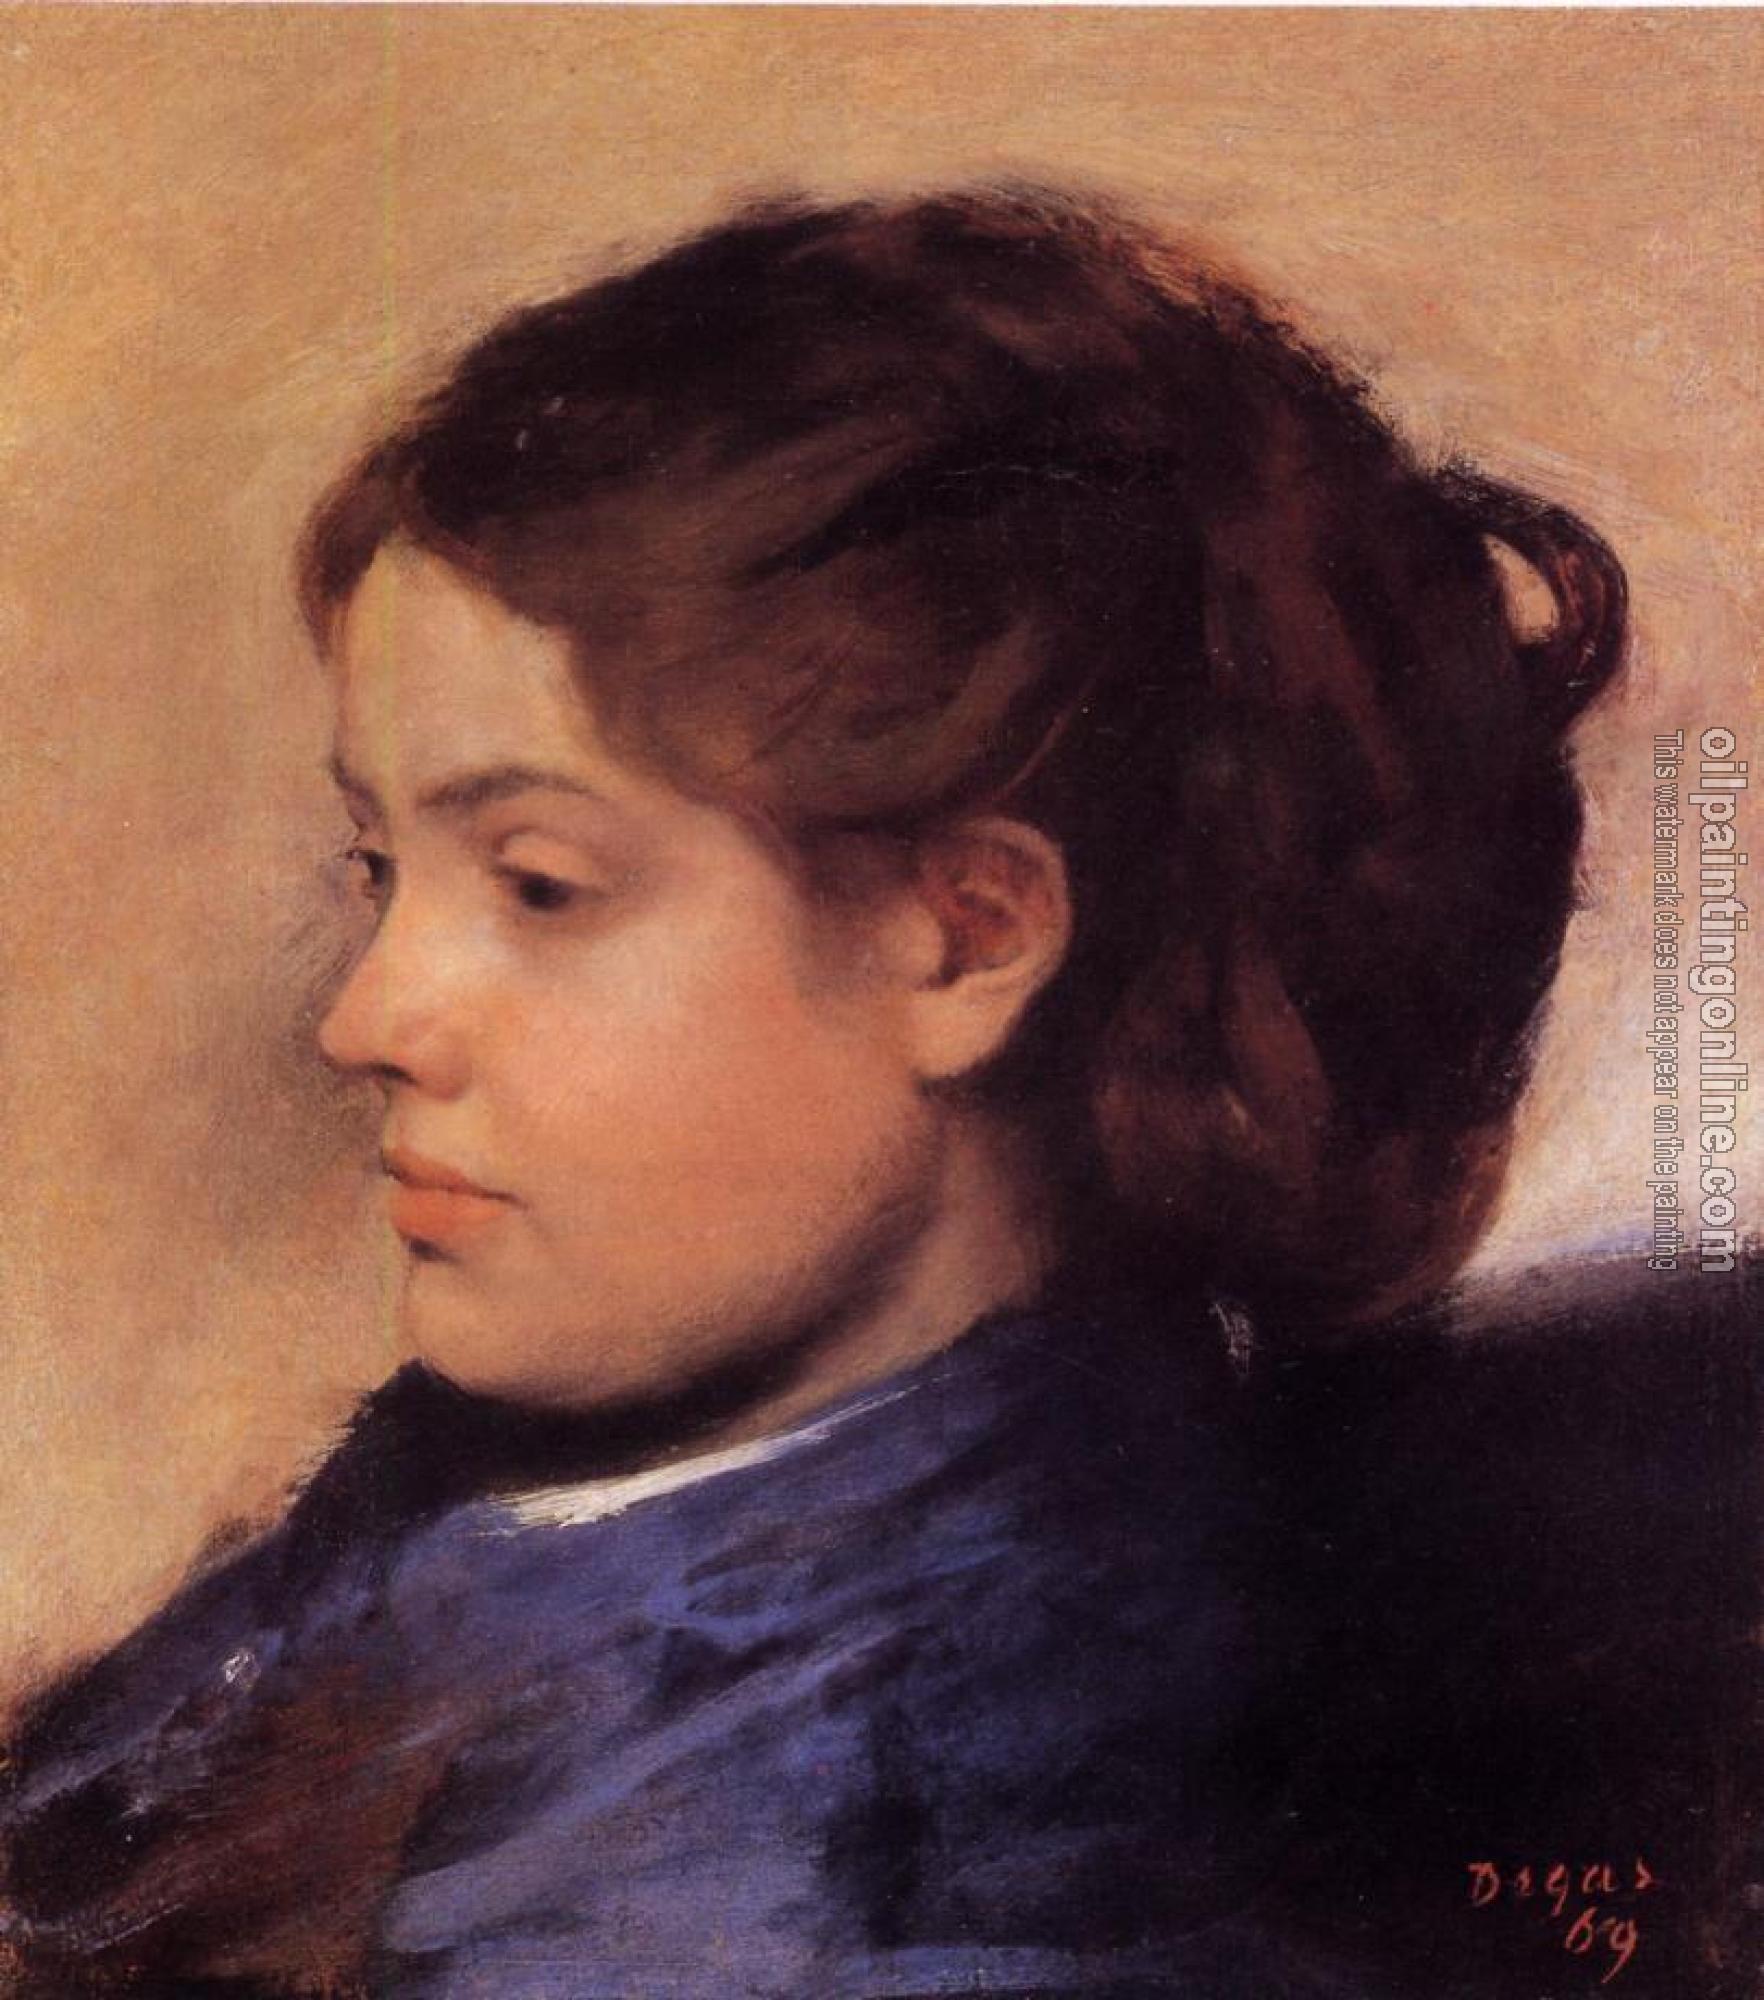 Degas, Edgar - Emma Dobigny